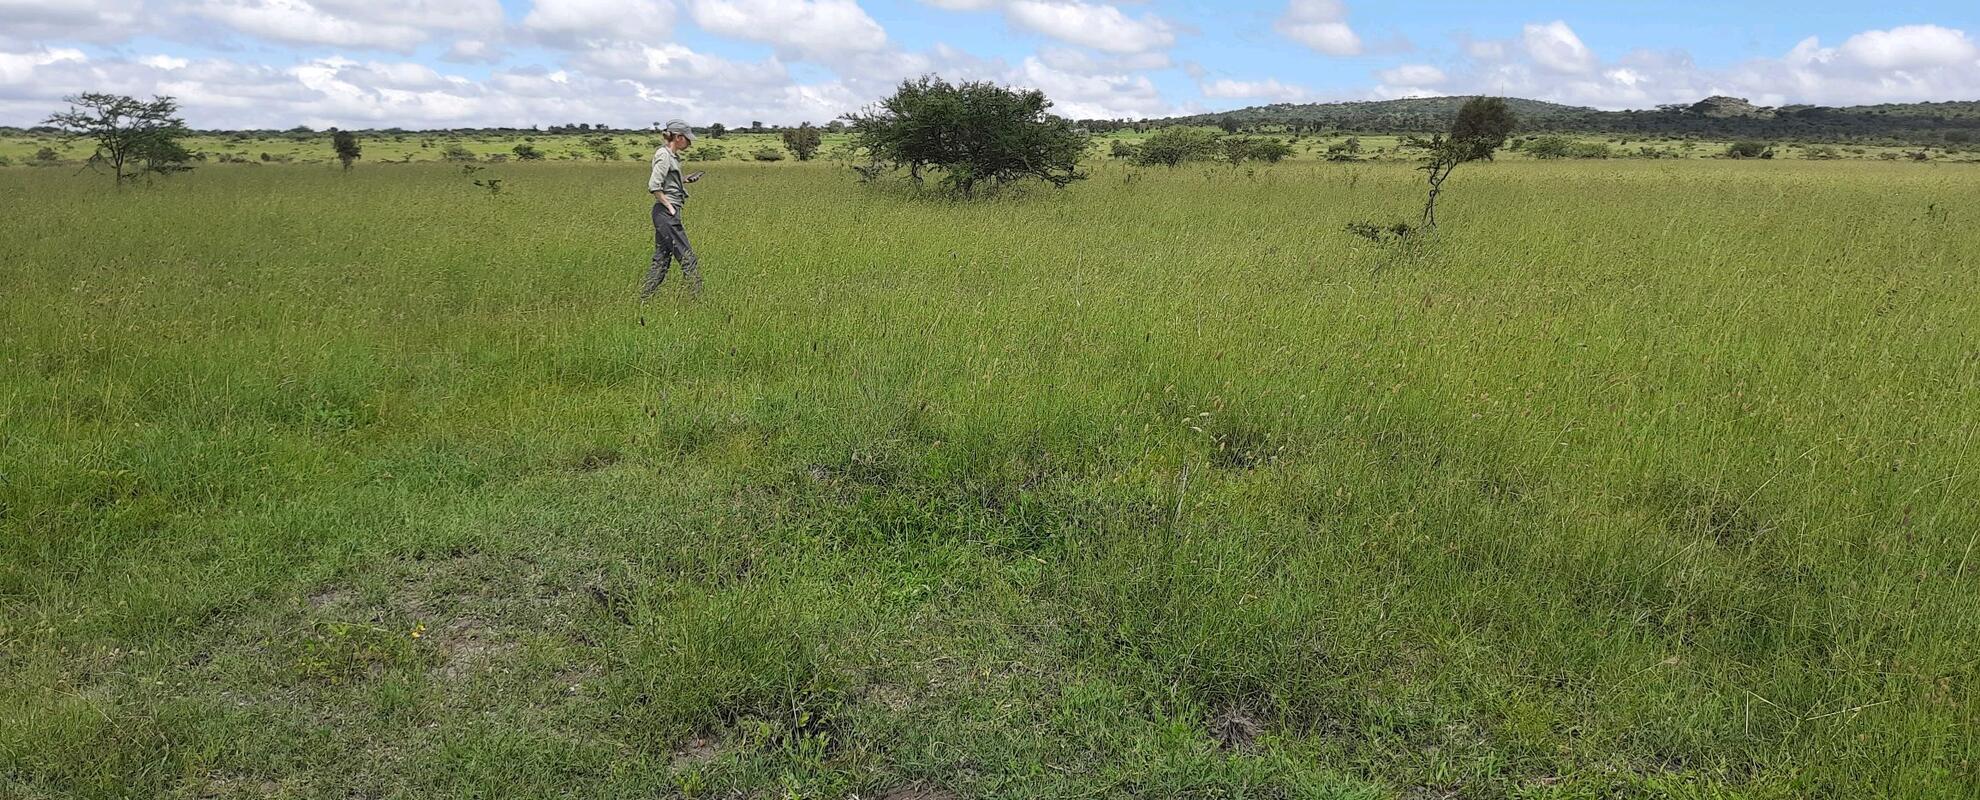 Surveying the grassland landscape